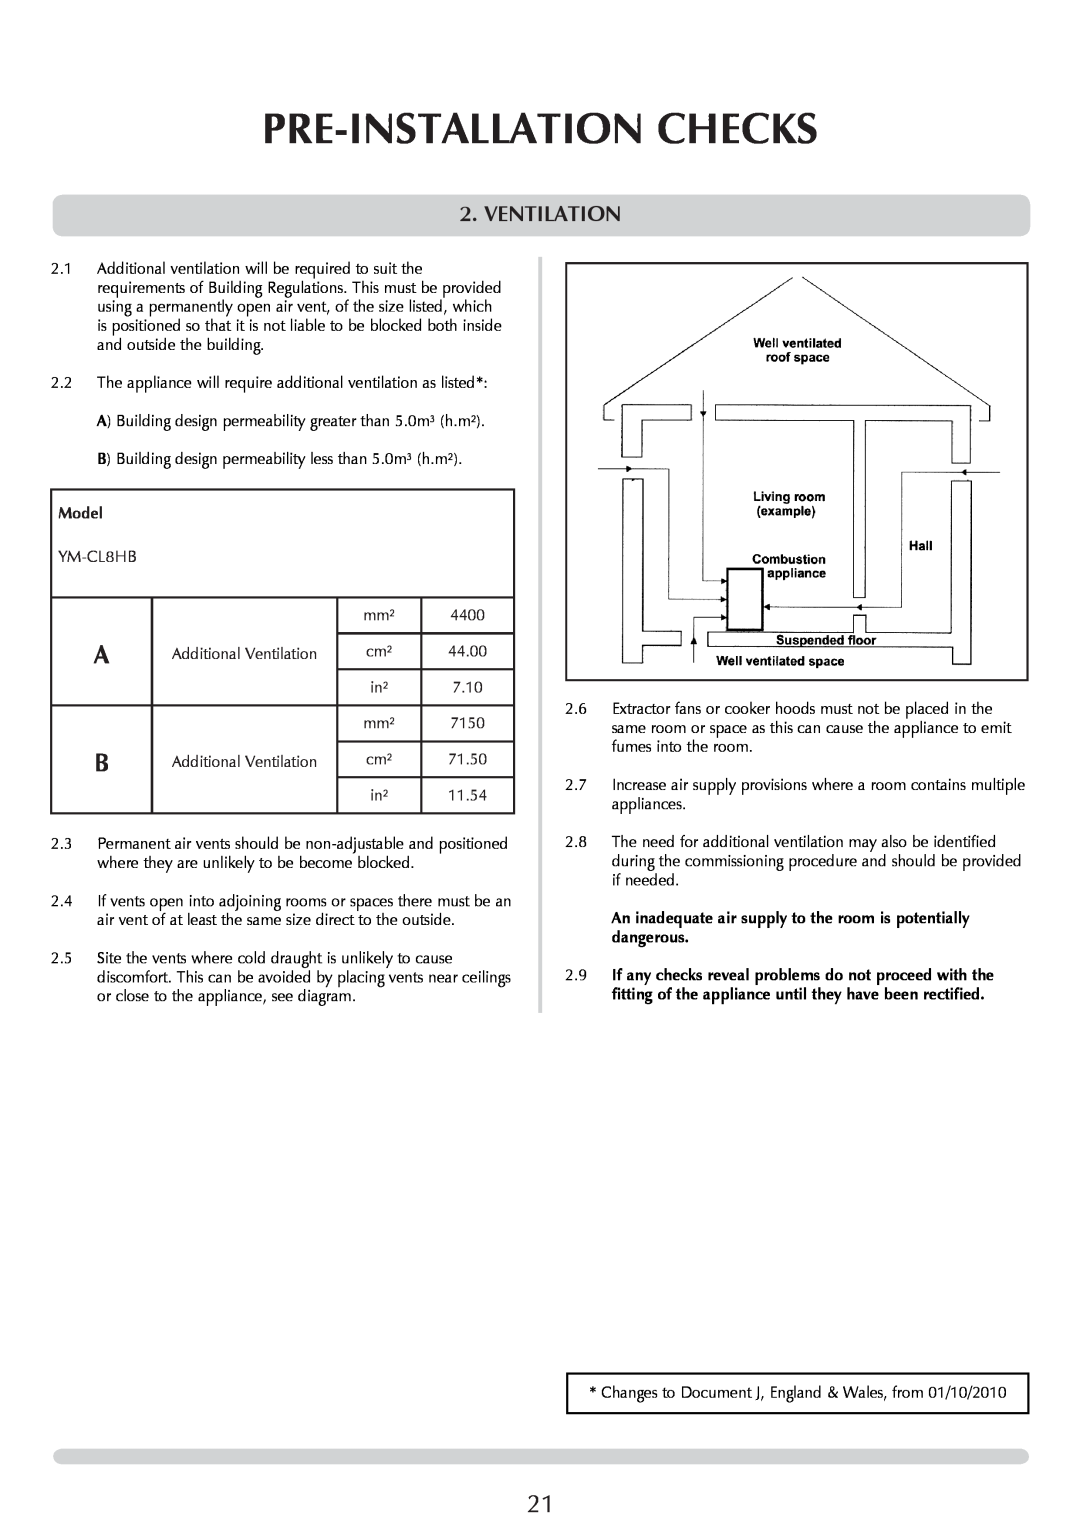 Yeoman YM-CL8HB manual Ventilation, Pre-Installationchecks, Model 